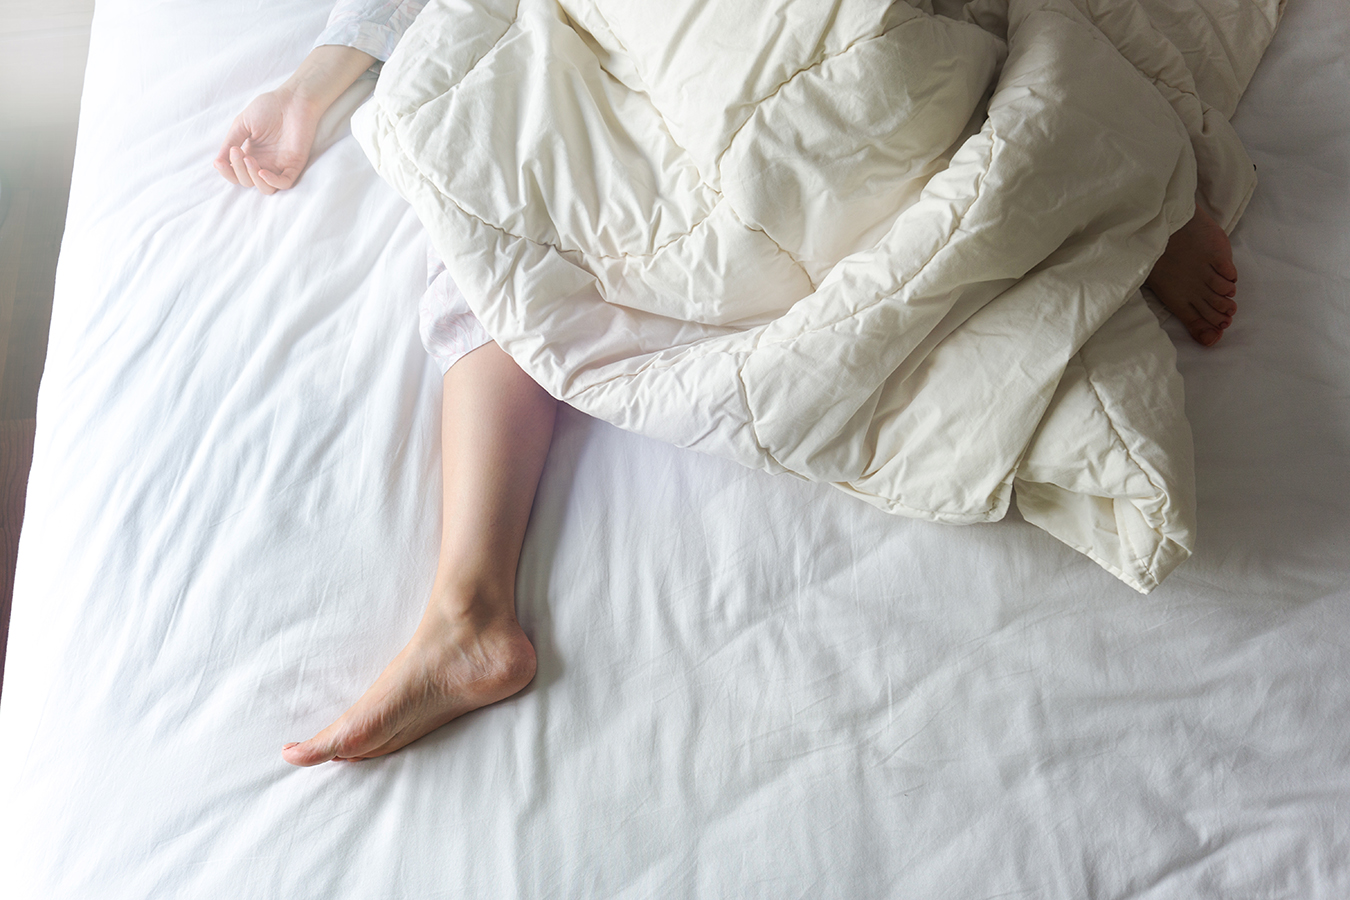 Photo of legs splayed on mattress during restless sleep